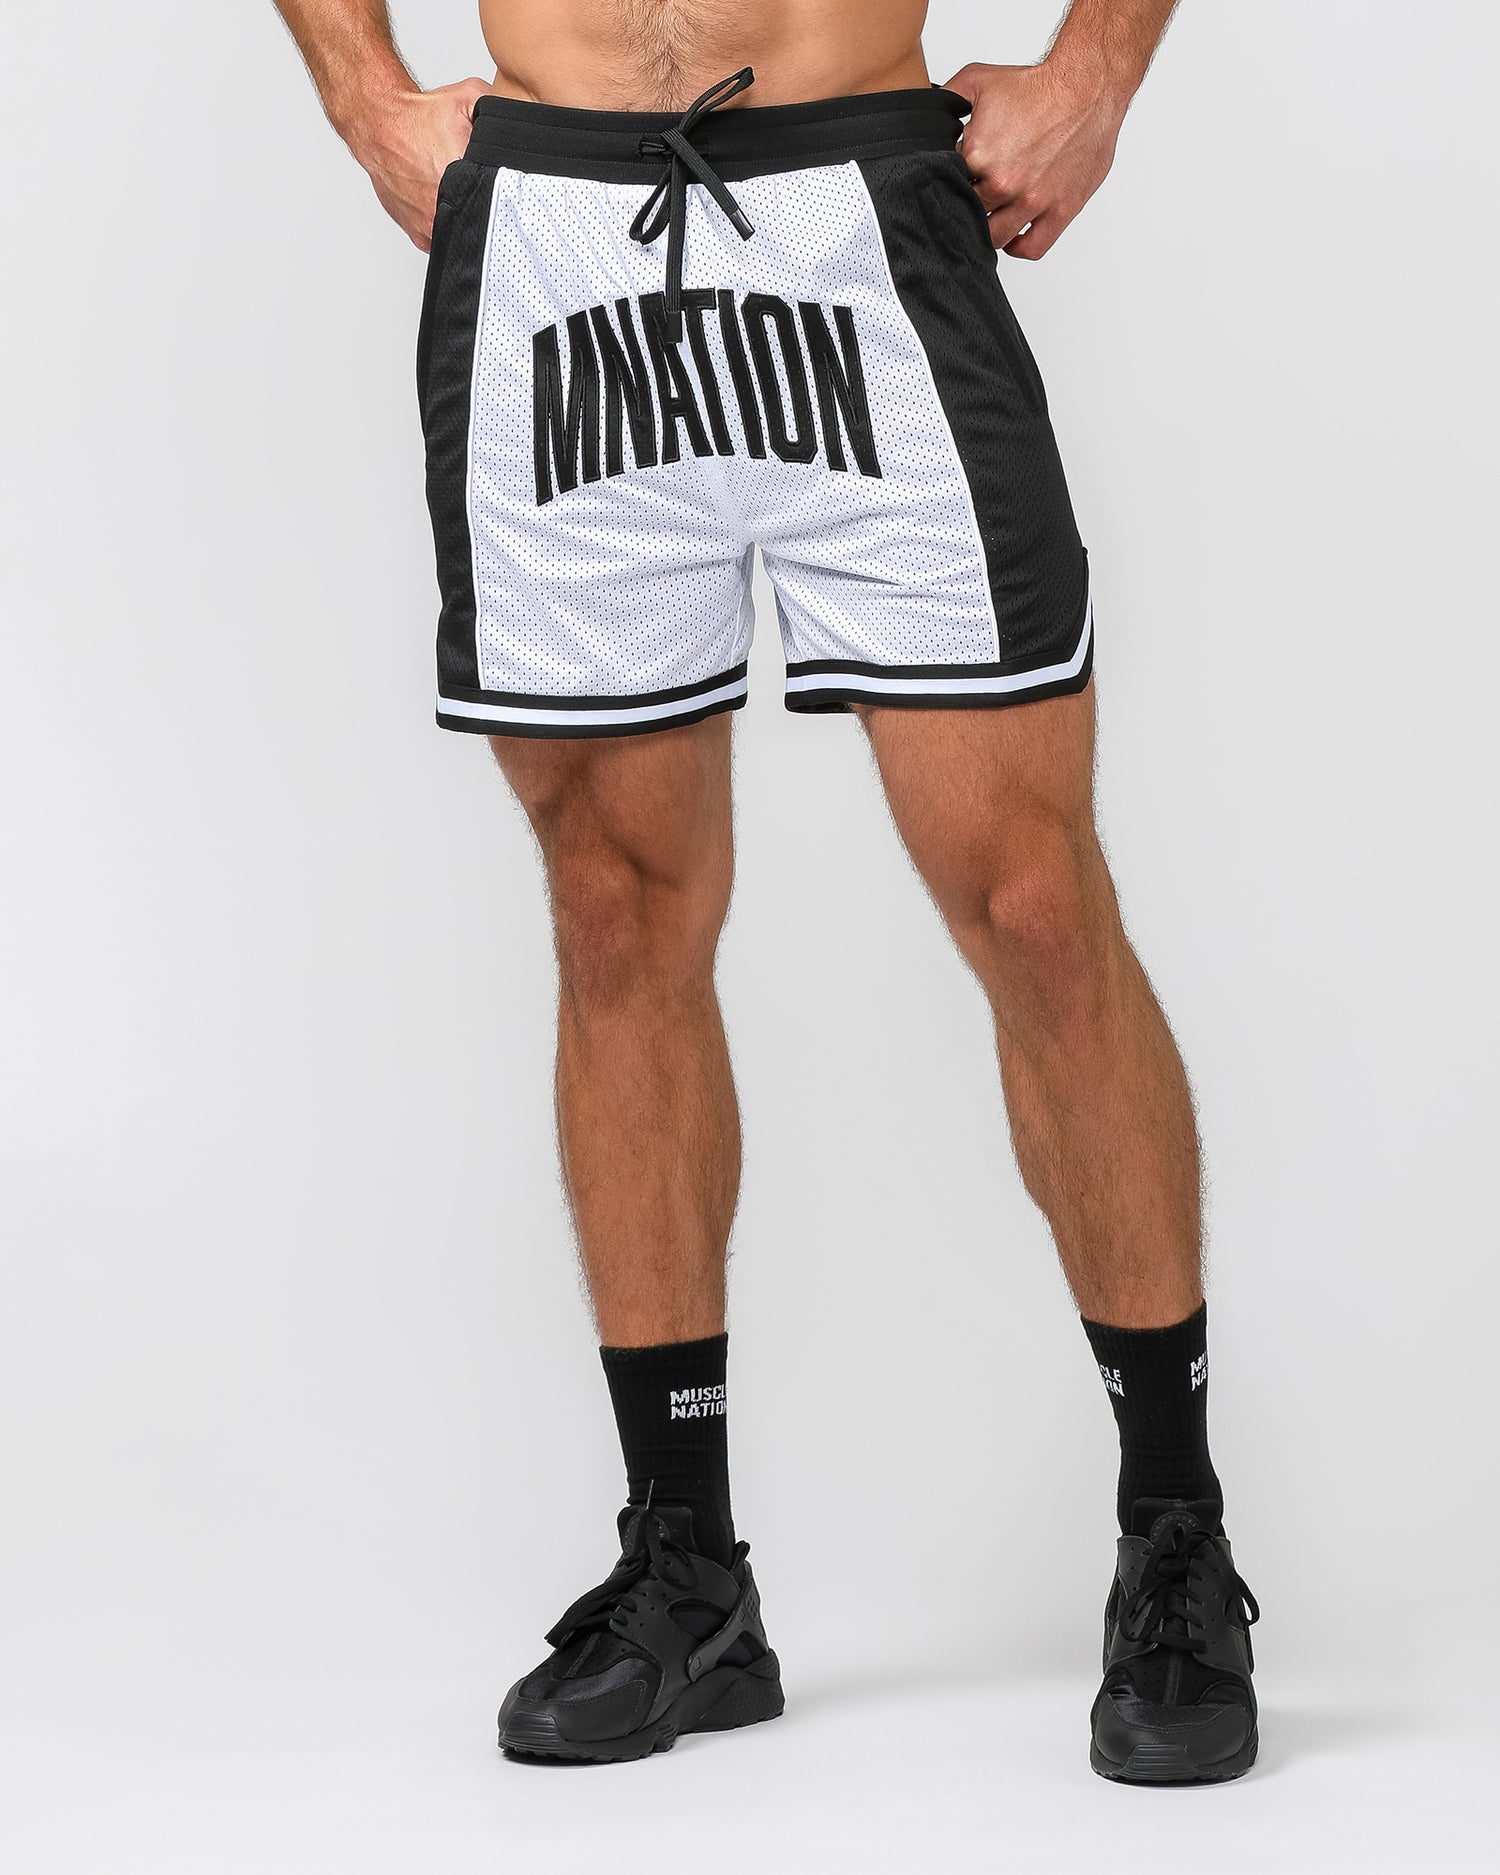 Fadeaway 5'' Basketball Shorts - White /Black